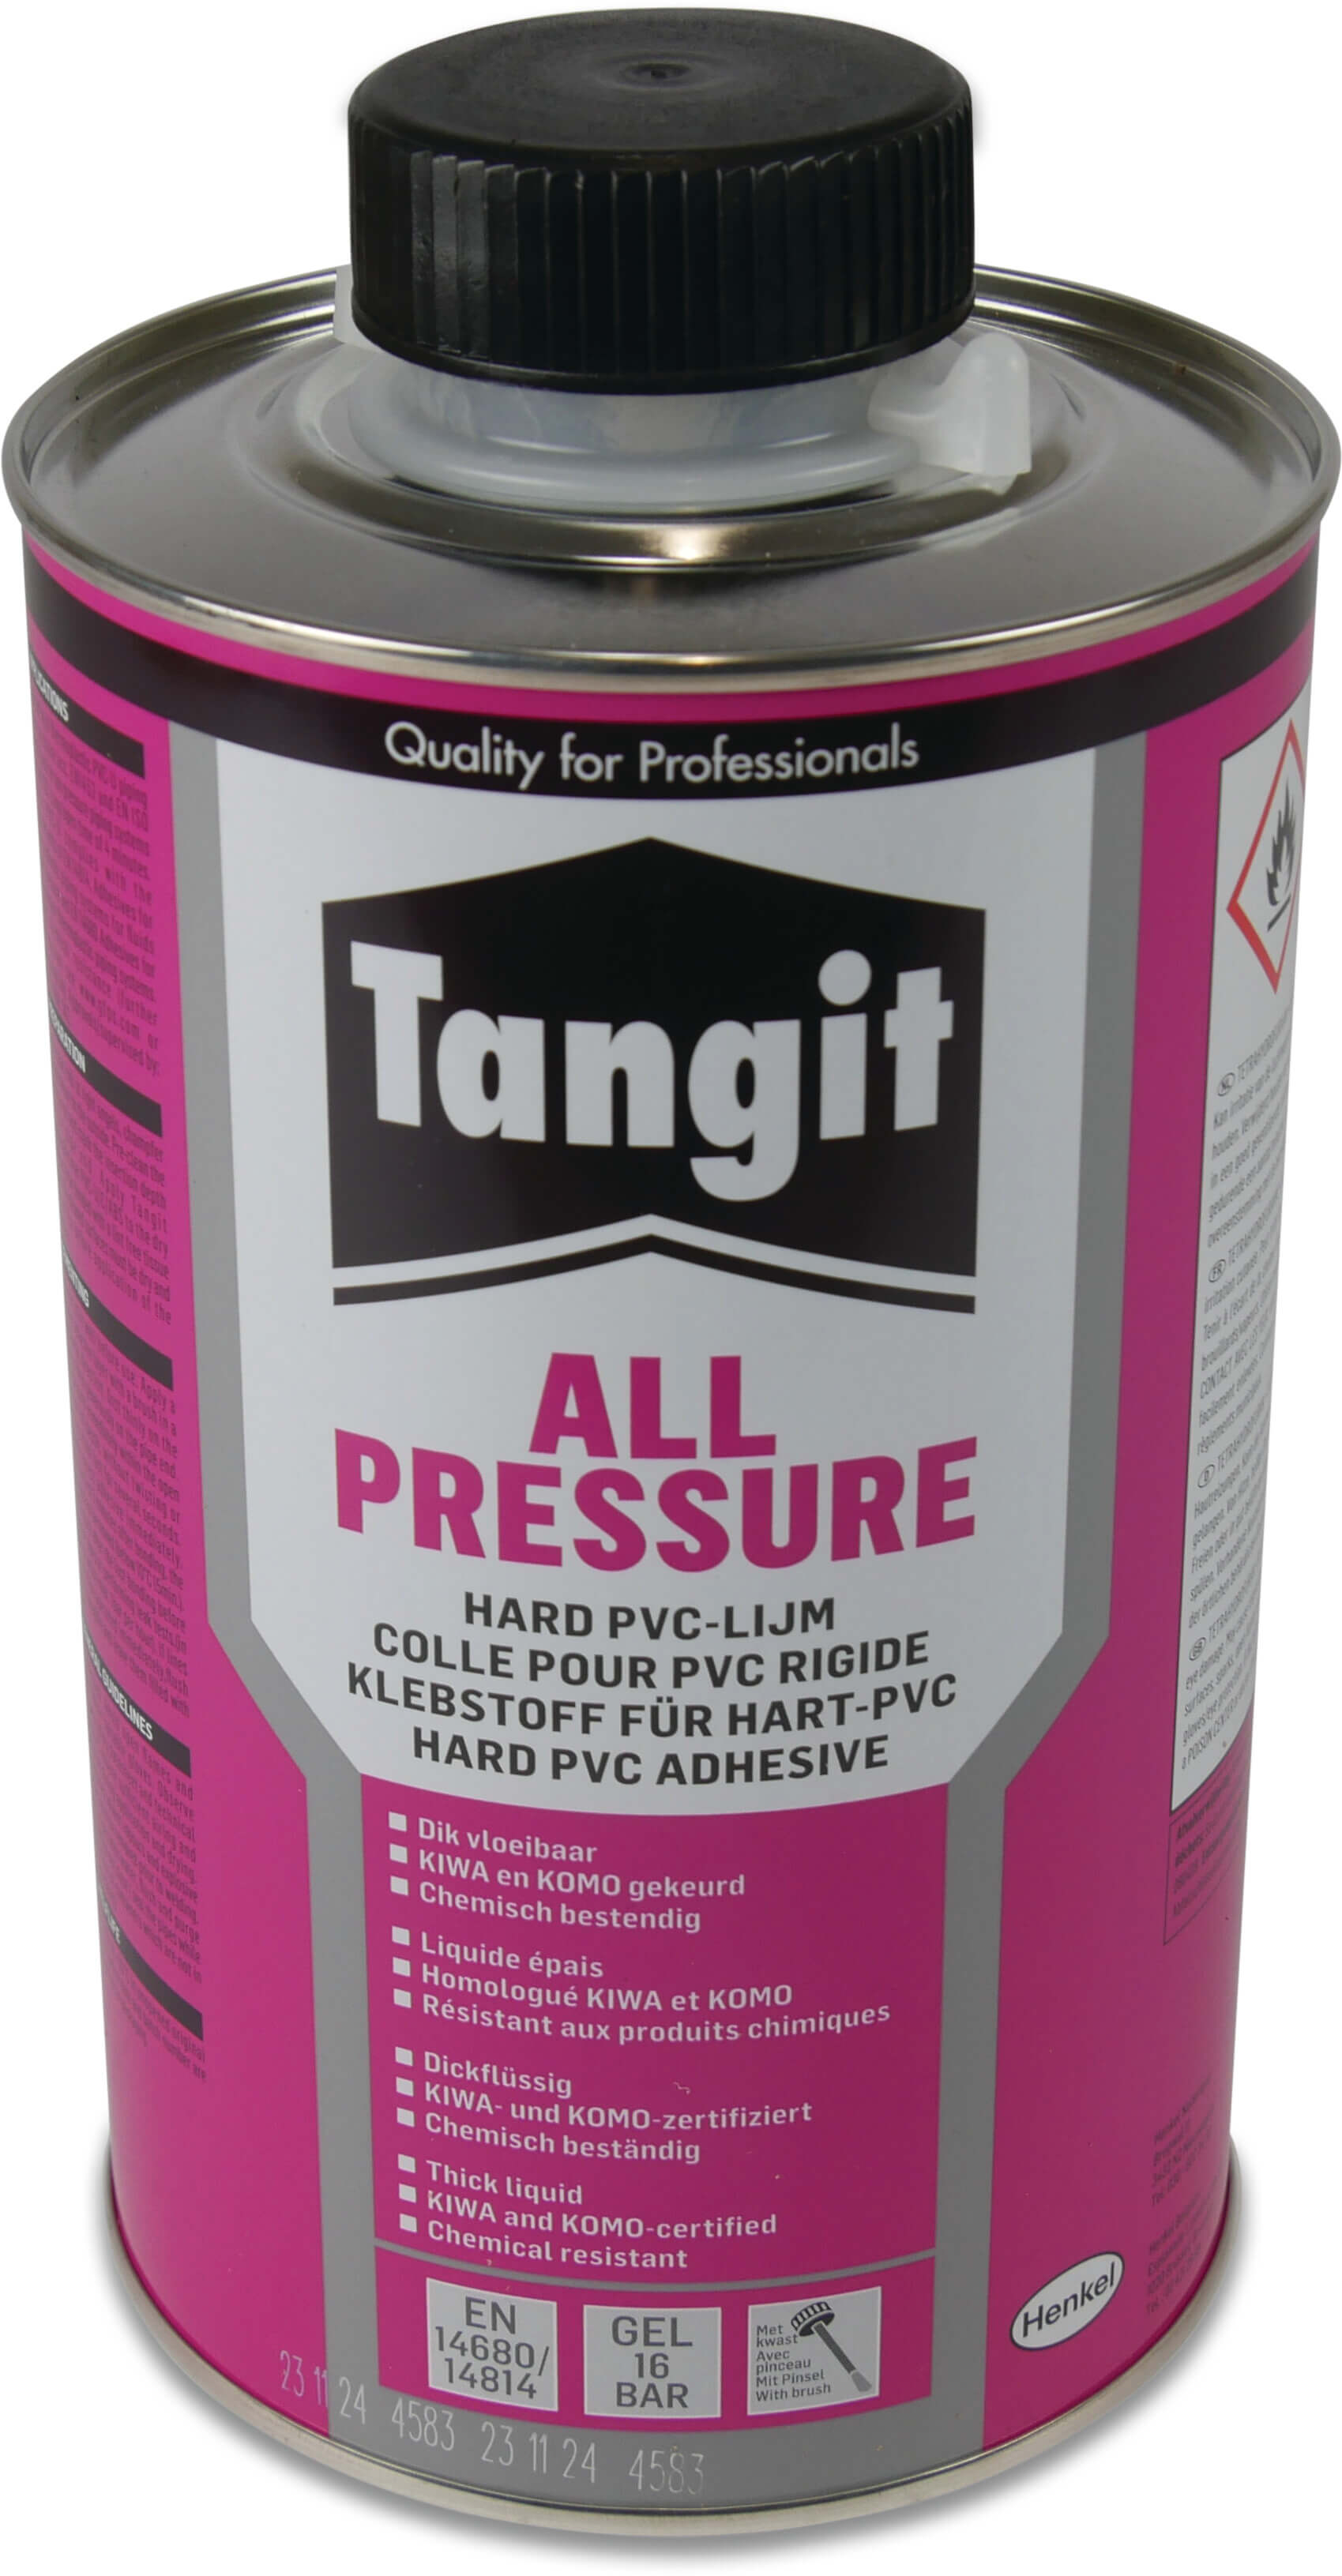 Tangit PVC-lijm 960g met kwast KIWA type All Pressure label EN/DE/NL/FR